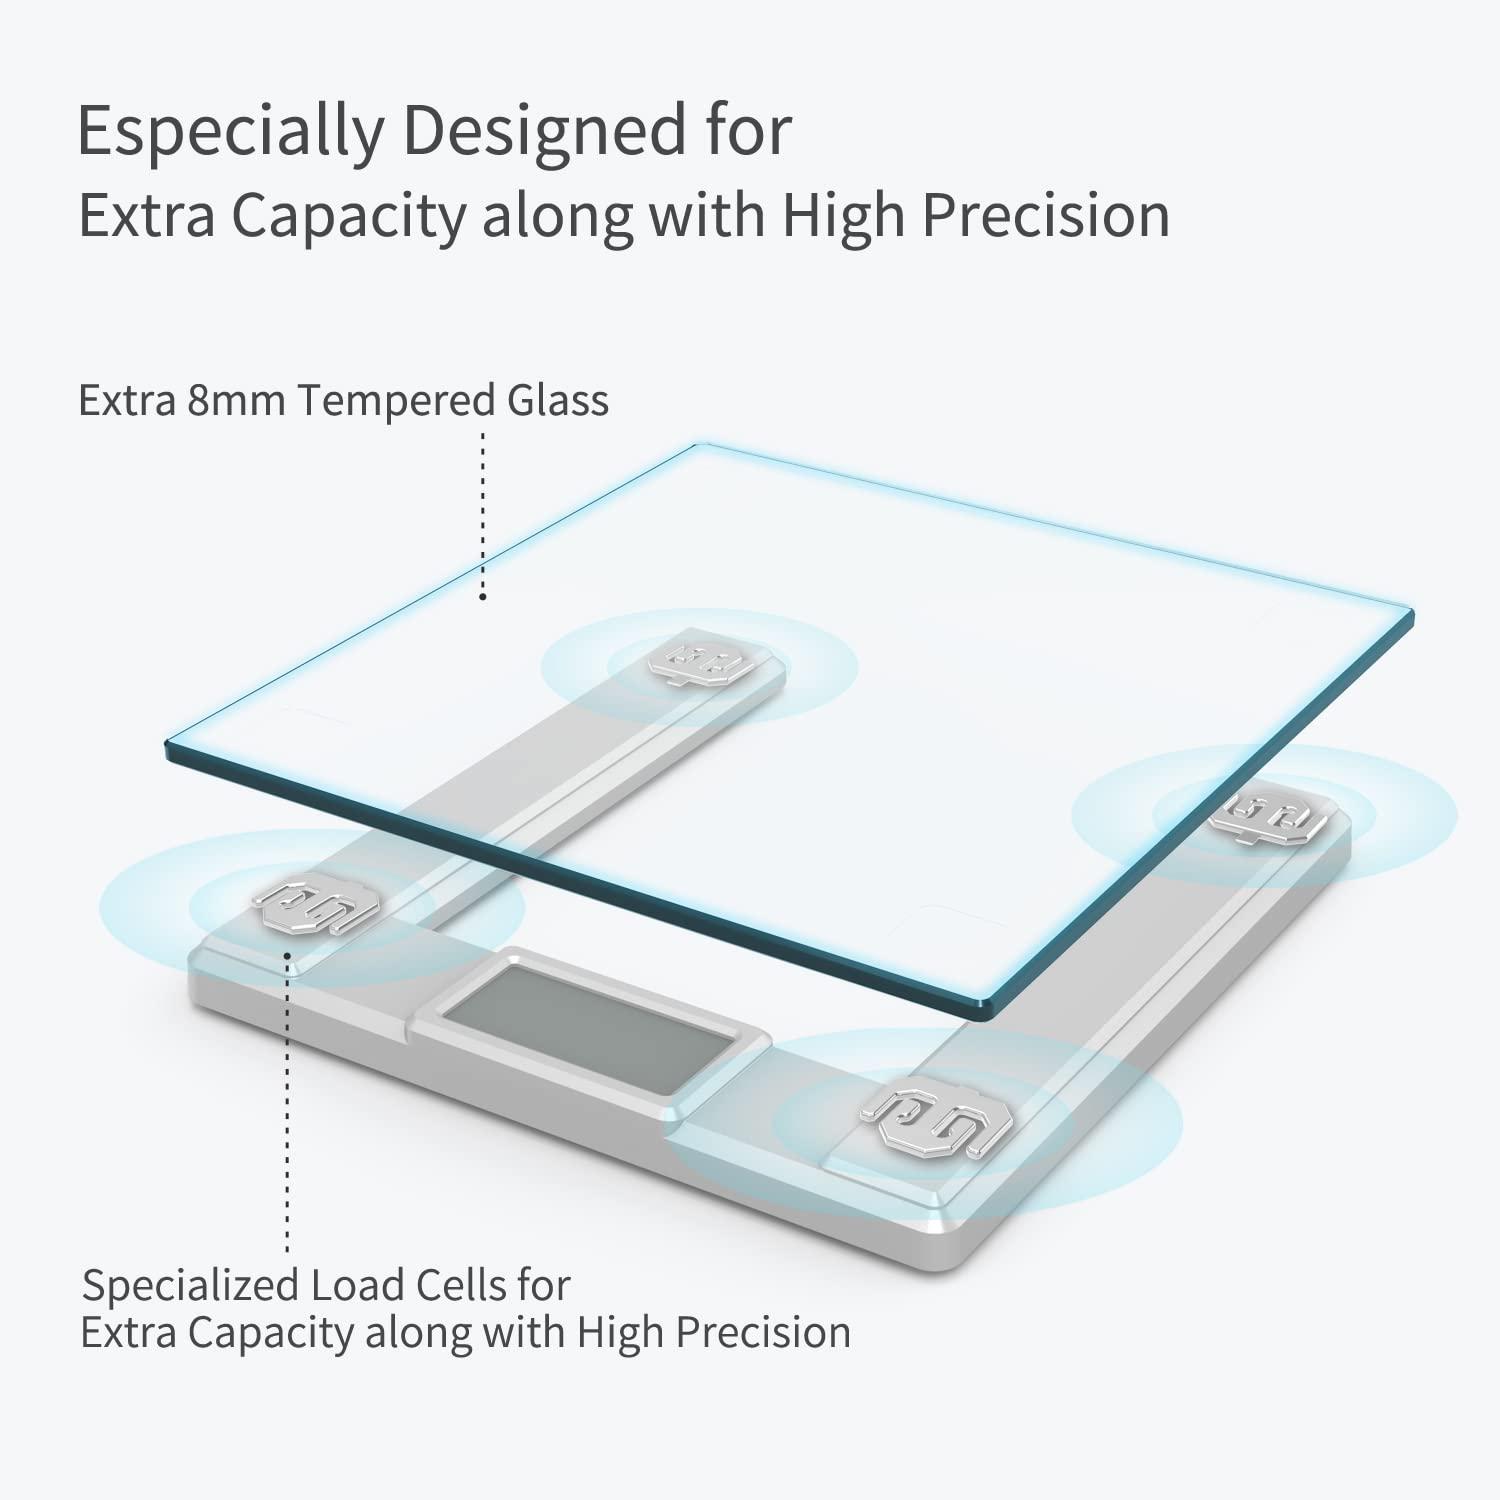 Vitafit 550lb Extra-High Capacity Smart Digital Body Weight Bathroom Scale